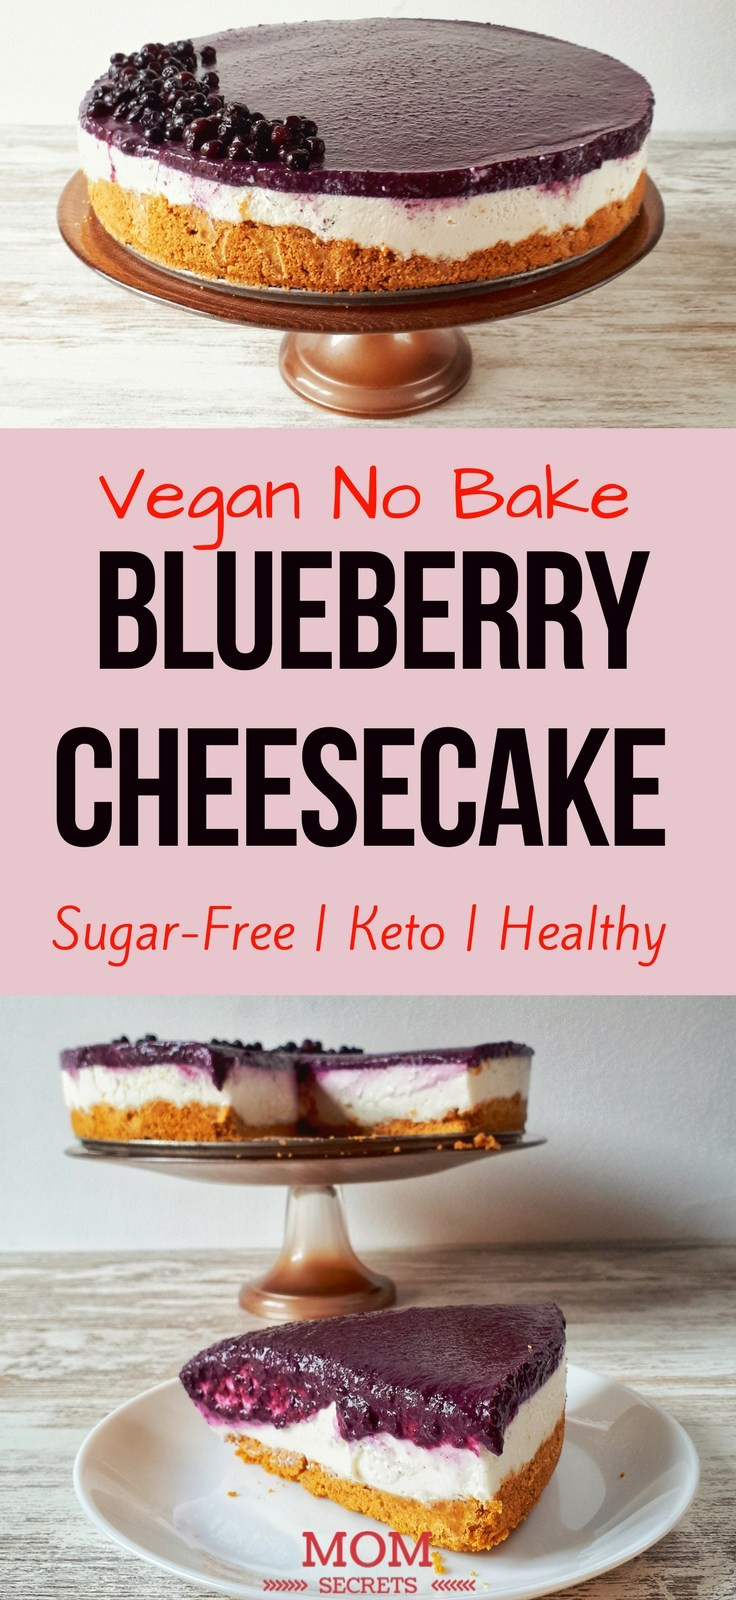 Keto Video Recipes Dessert
 12 Easy Keto Dessert Recipes Keep Ketogenic Diet with No